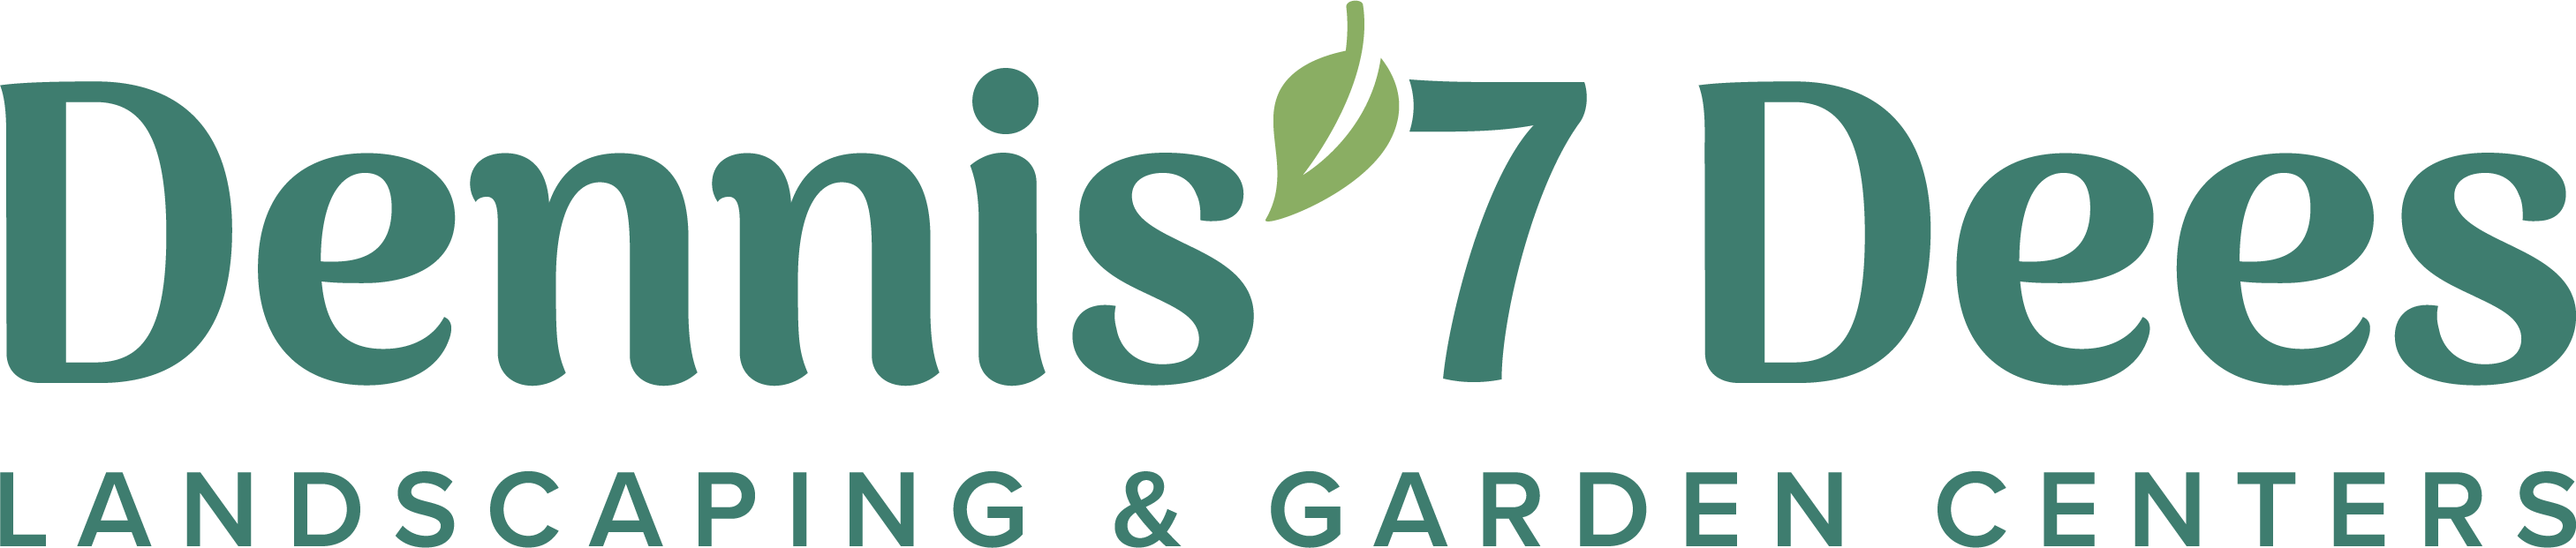 Dennis' 7 Dees Landscaping & Garden Centers logo